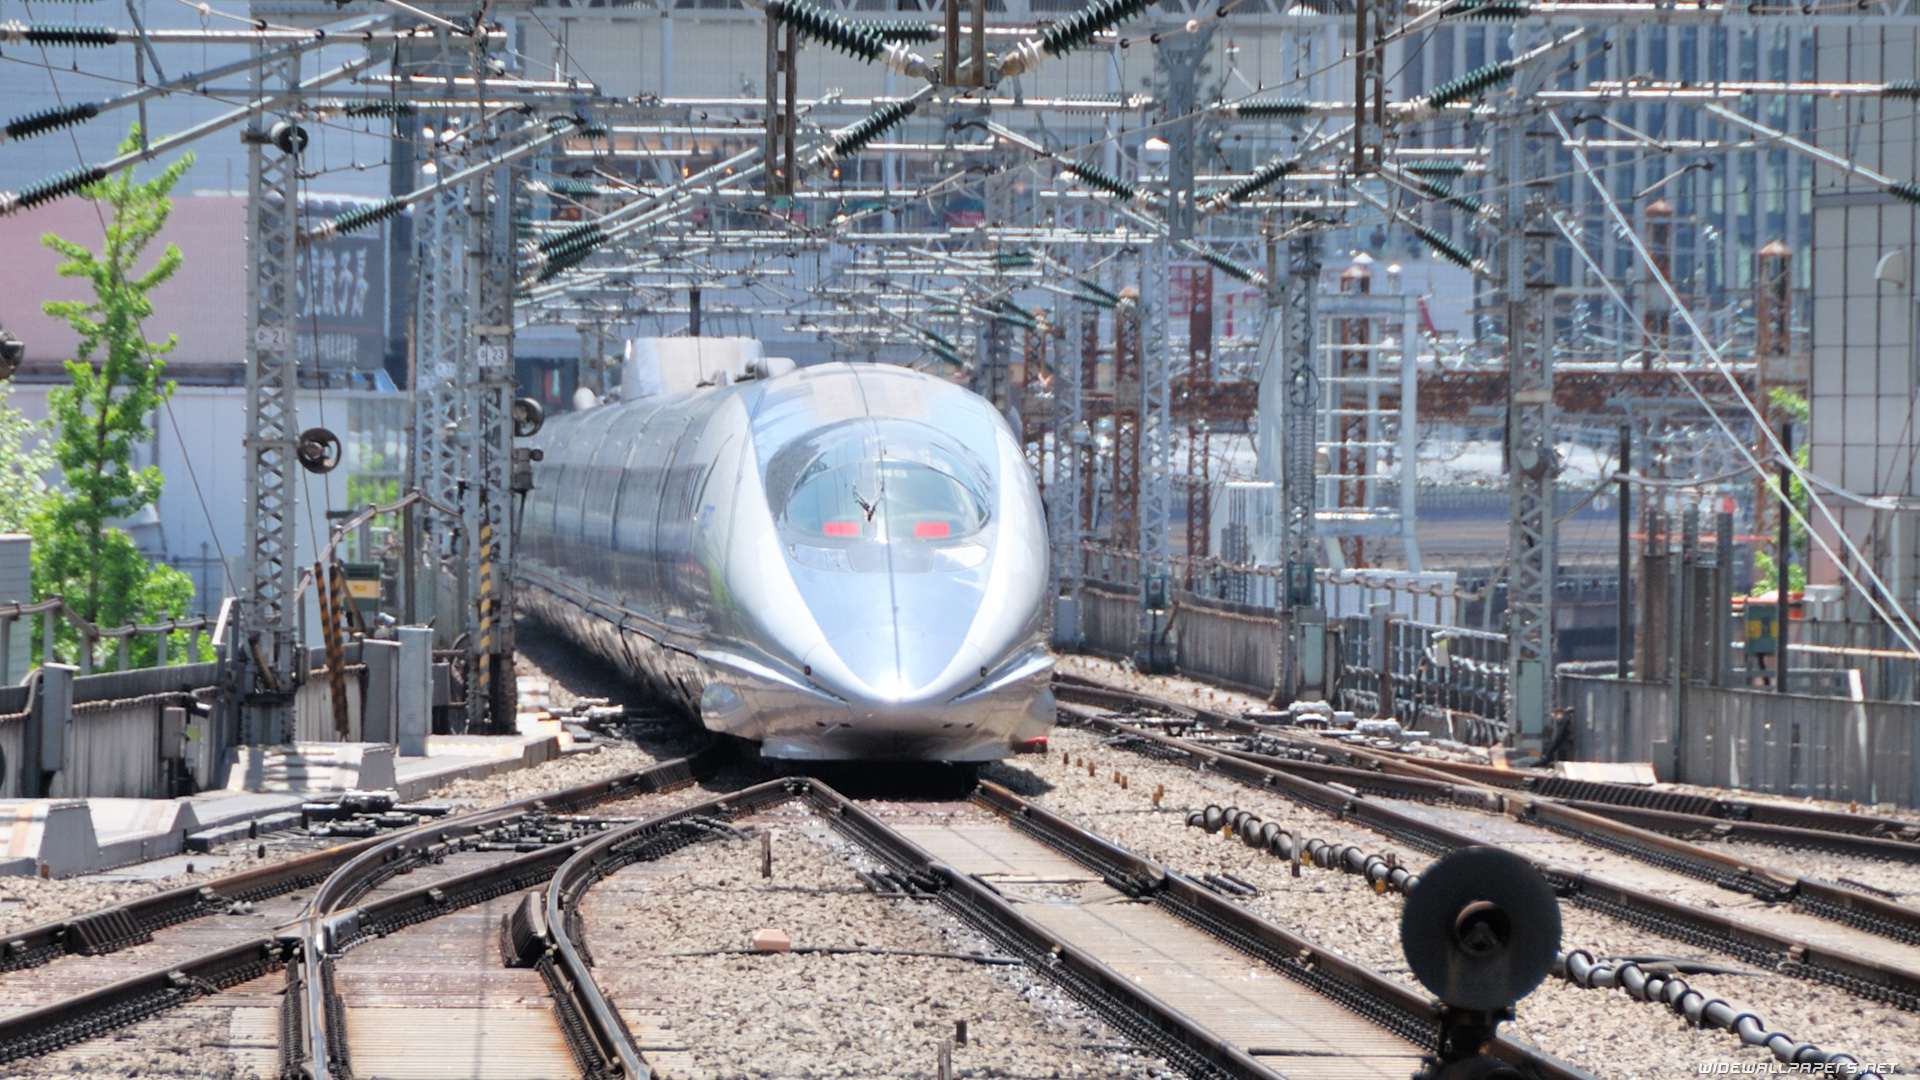 Japan High Speed Trains Desktop Wallpaper HD And Wide